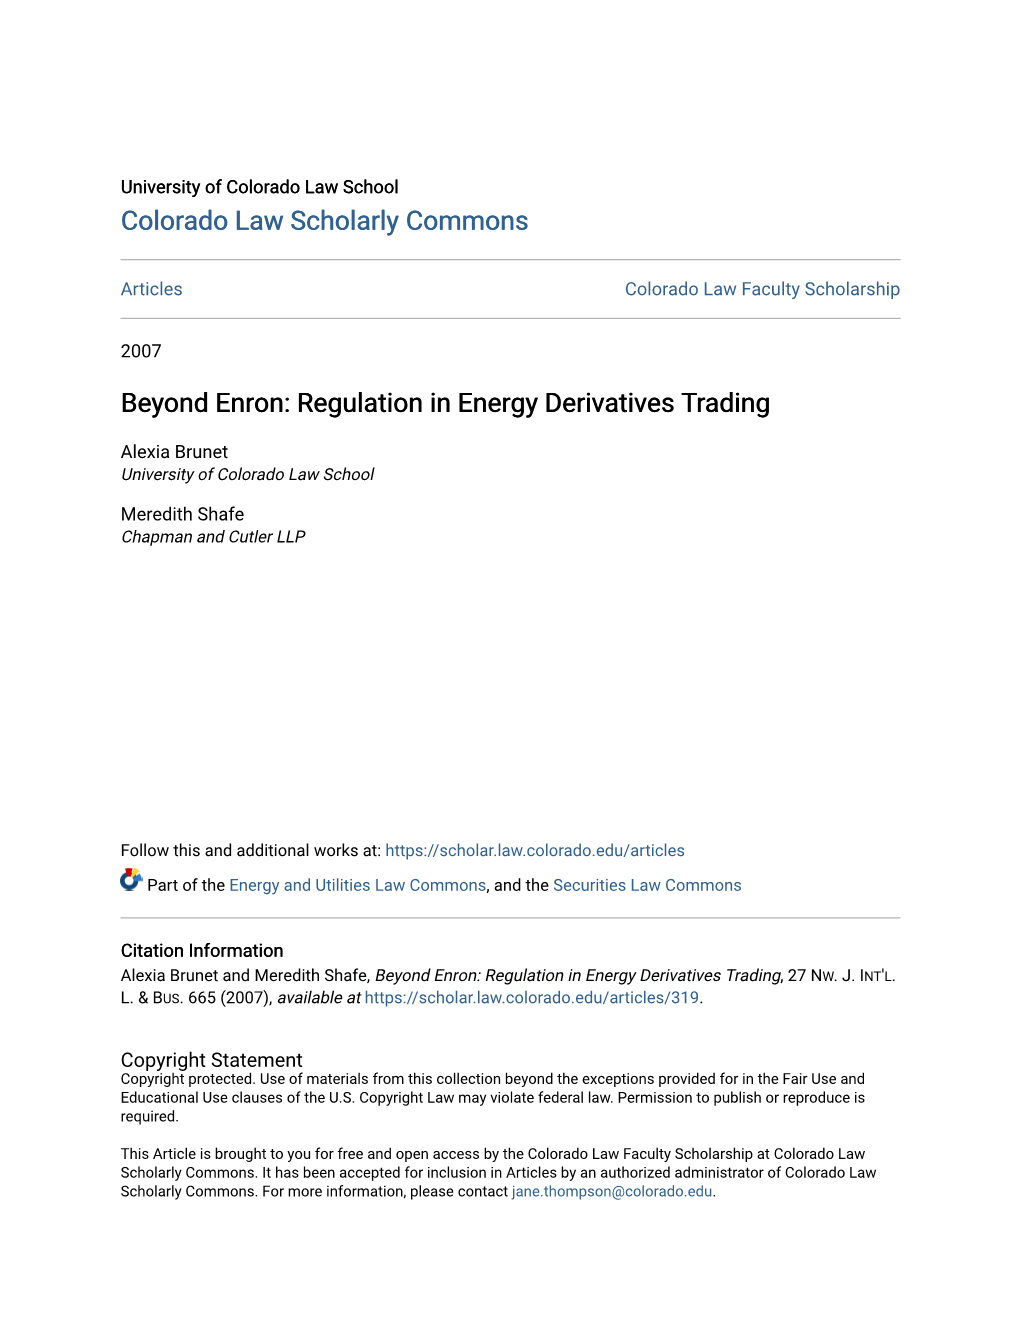 Regulation in Energy Derivatives Trading